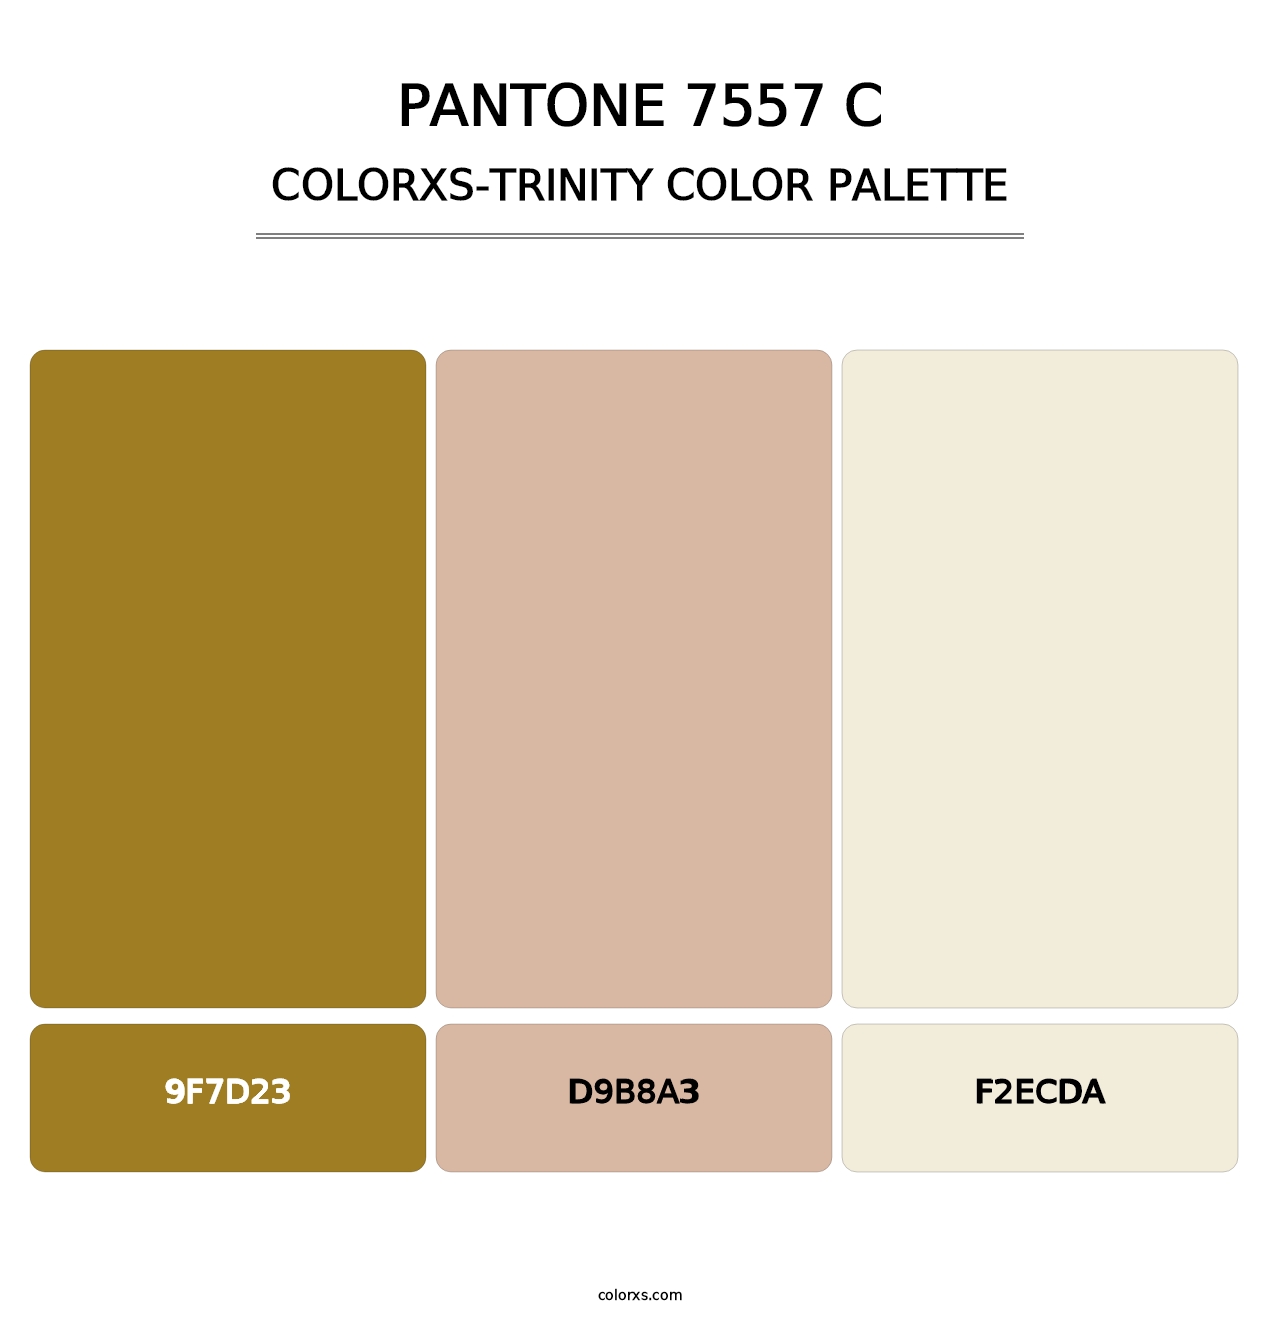 PANTONE 7557 C - Colorxs Trinity Palette